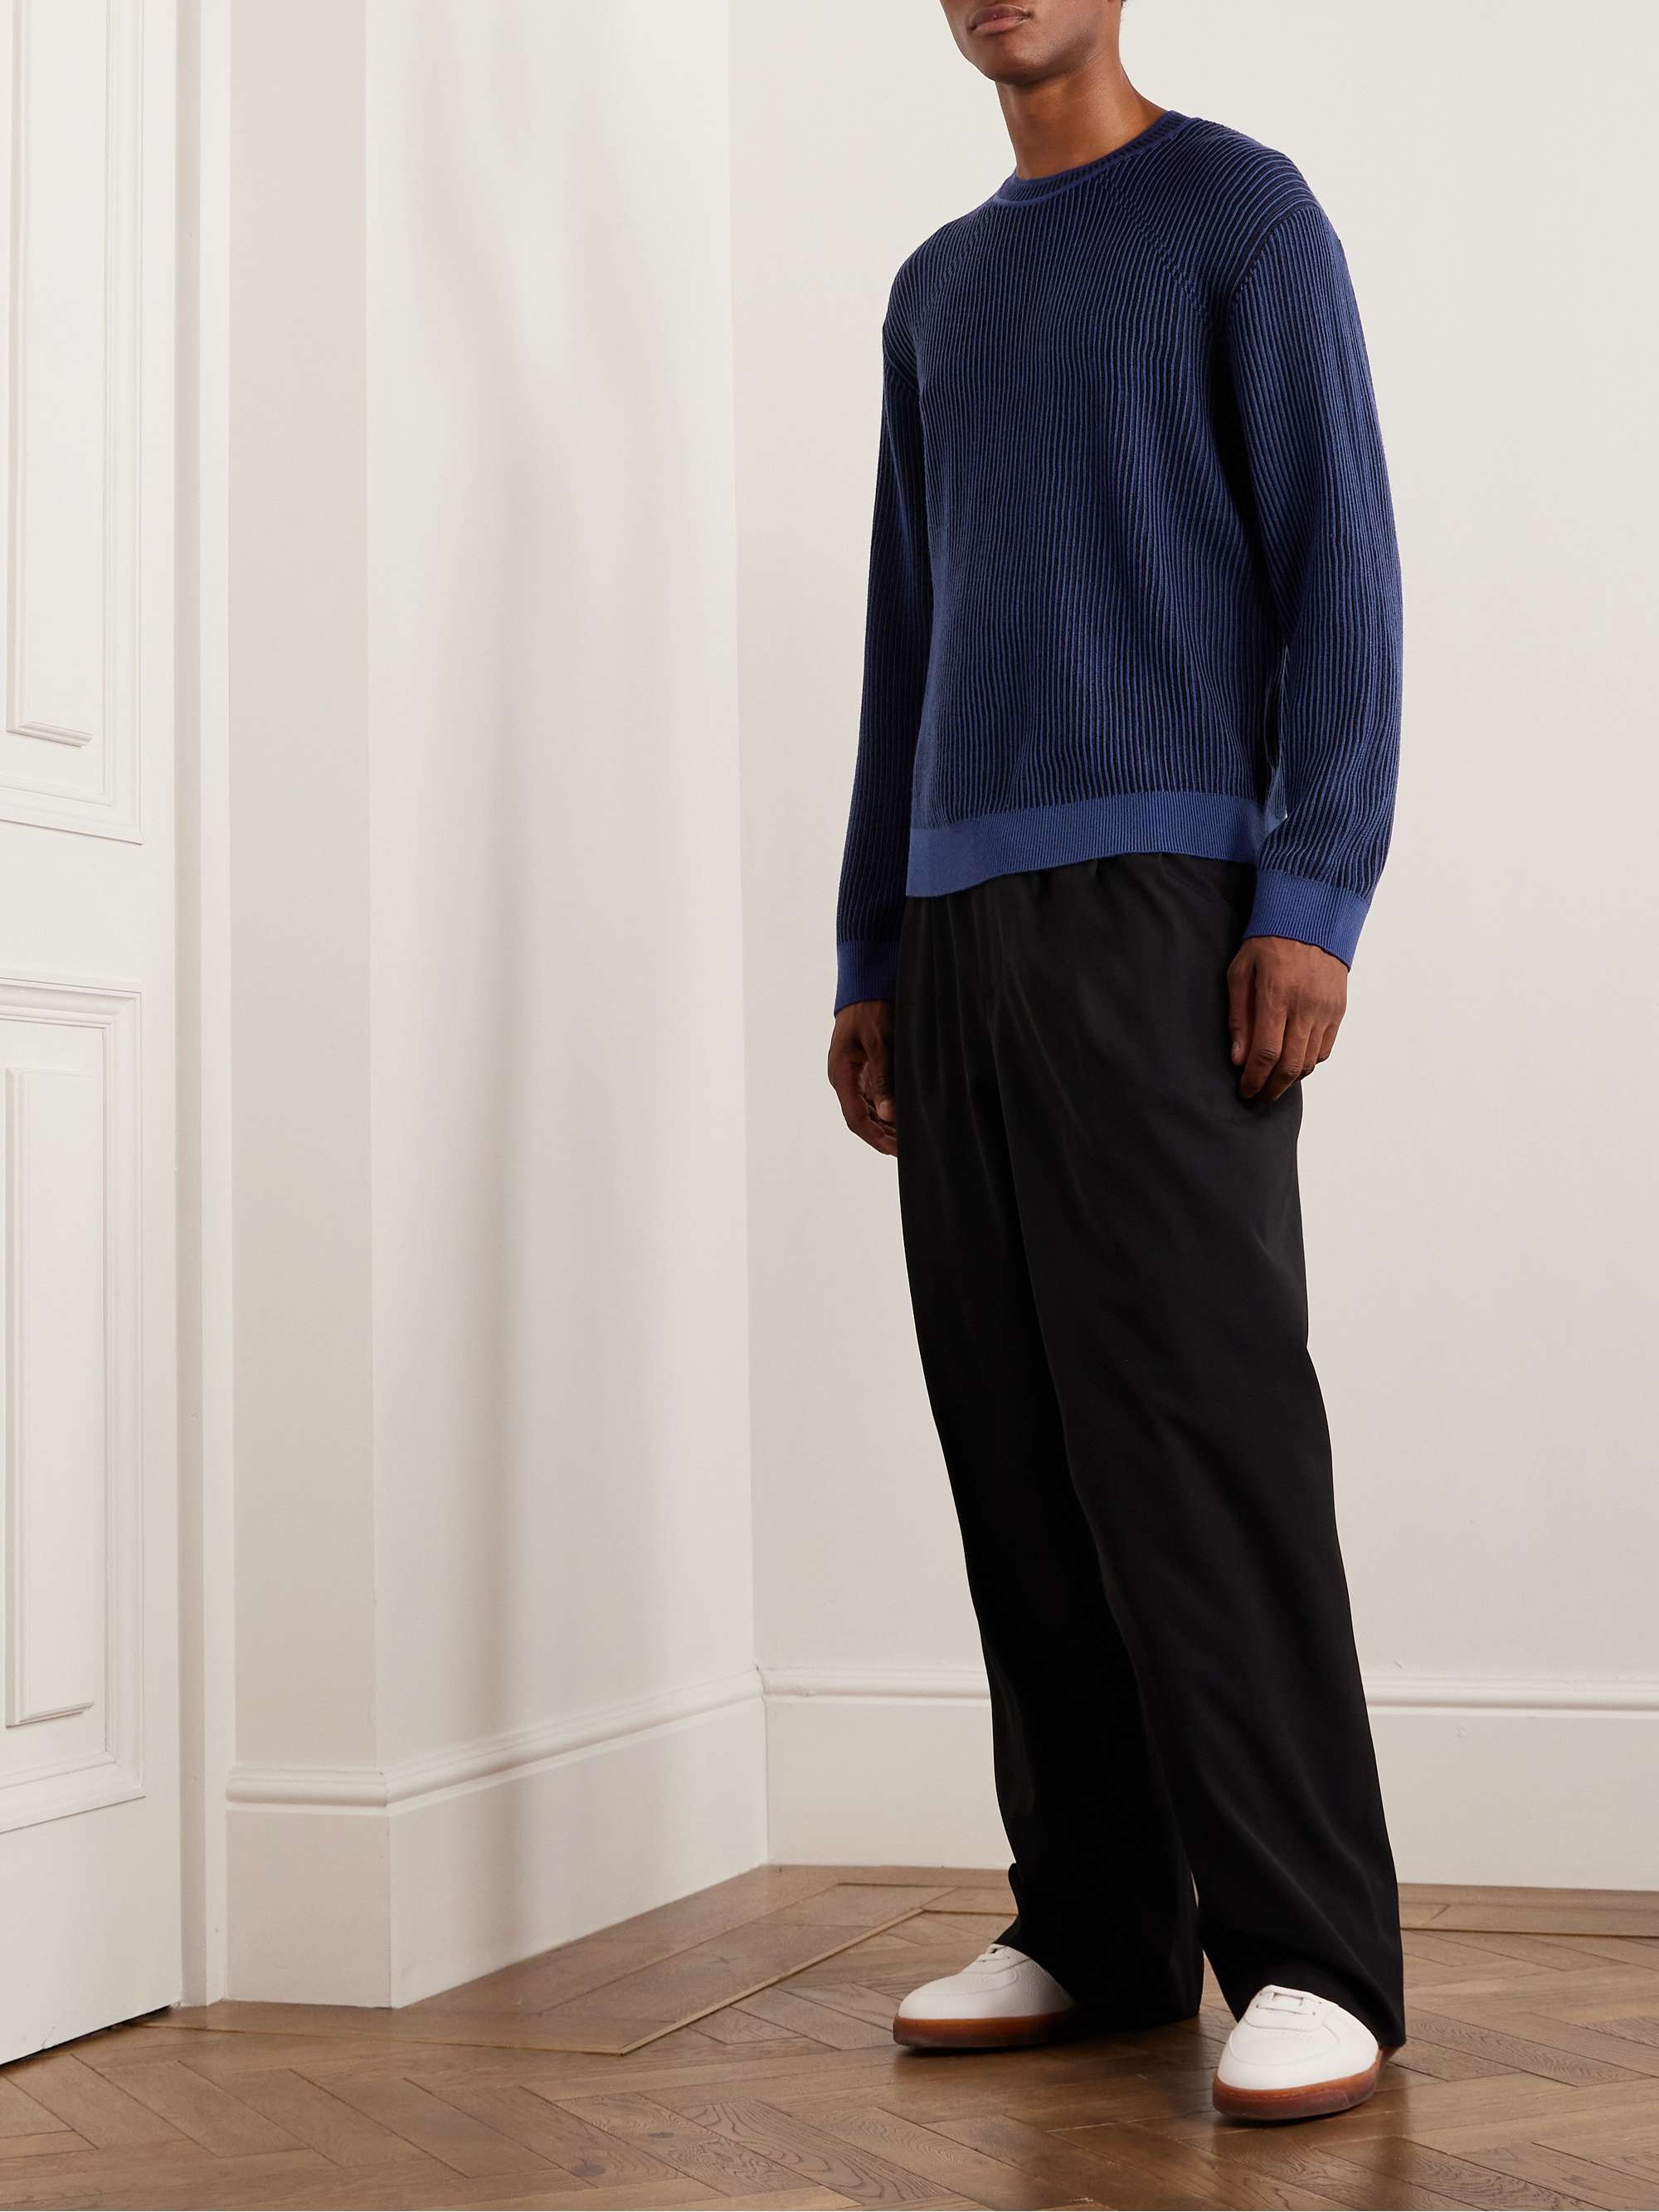 PAUL SMITH Striped Merino Wool Sweater for Men | MR PORTER